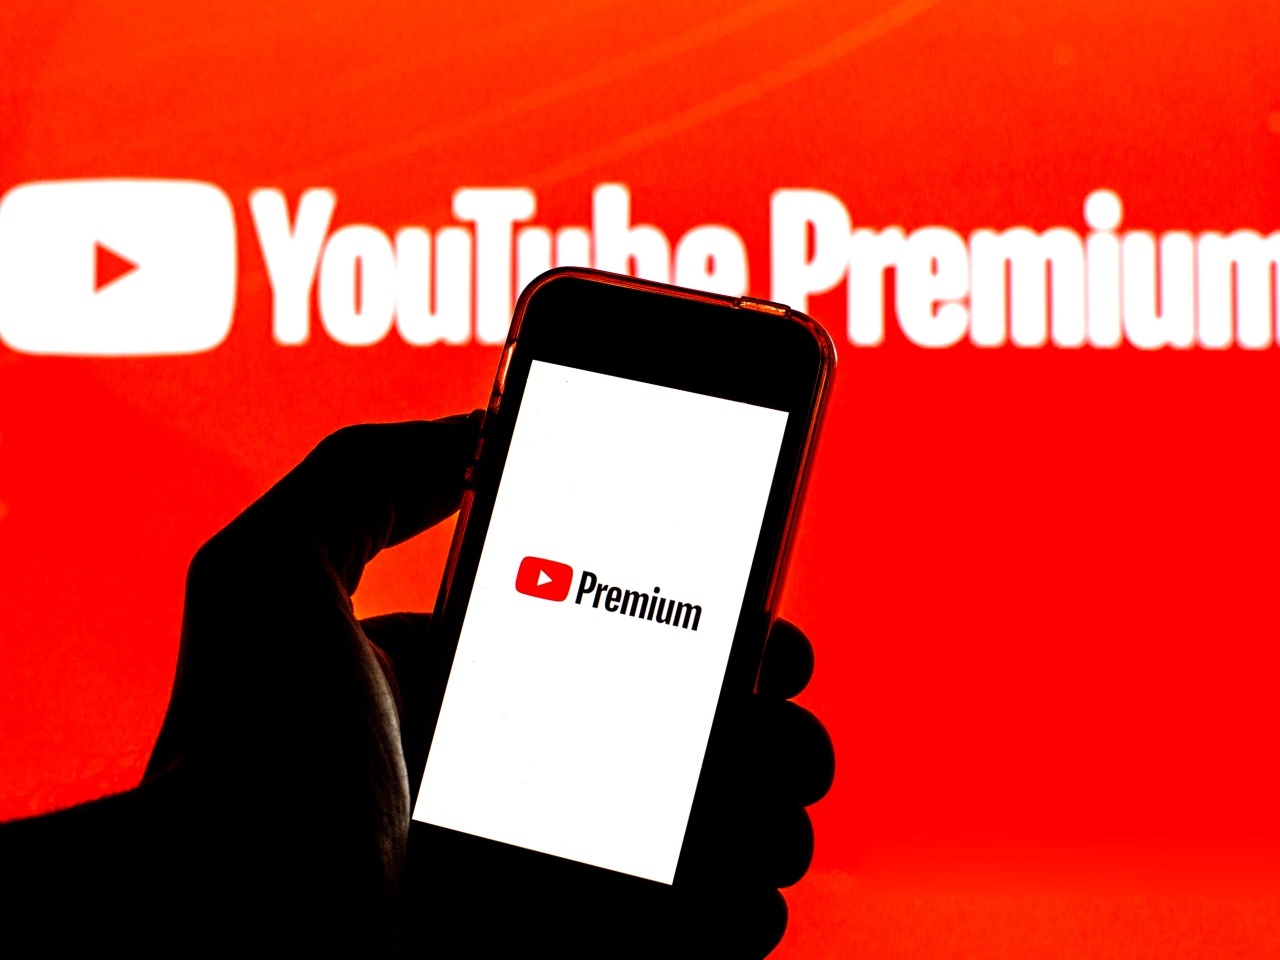 YouTube Premium」、米国で値上げ - CNET Japan